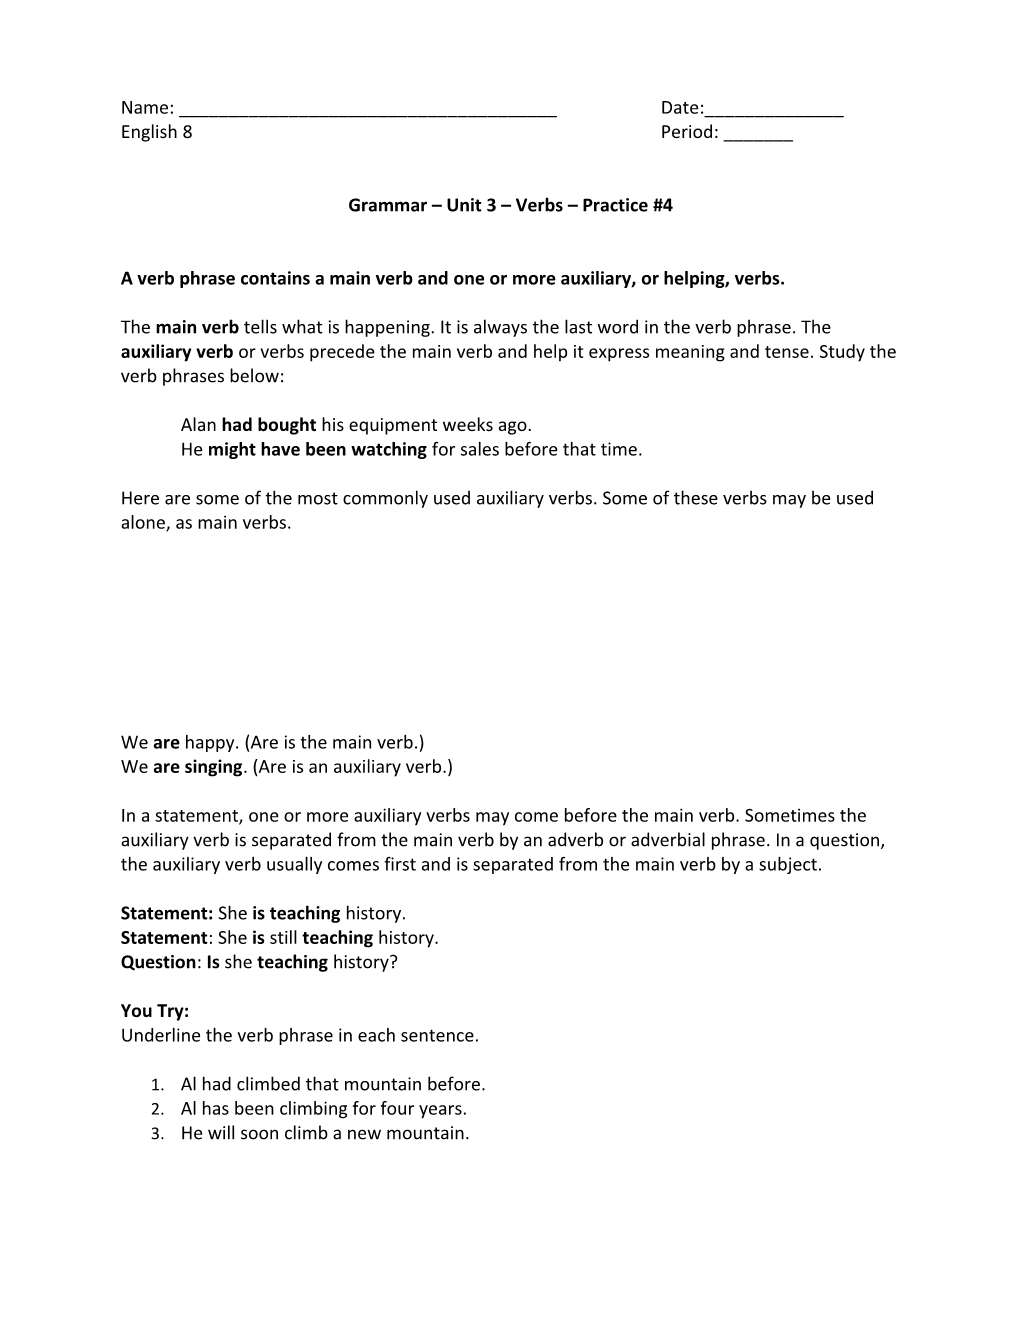 Grammar Unit 3 Verbs Practice #4